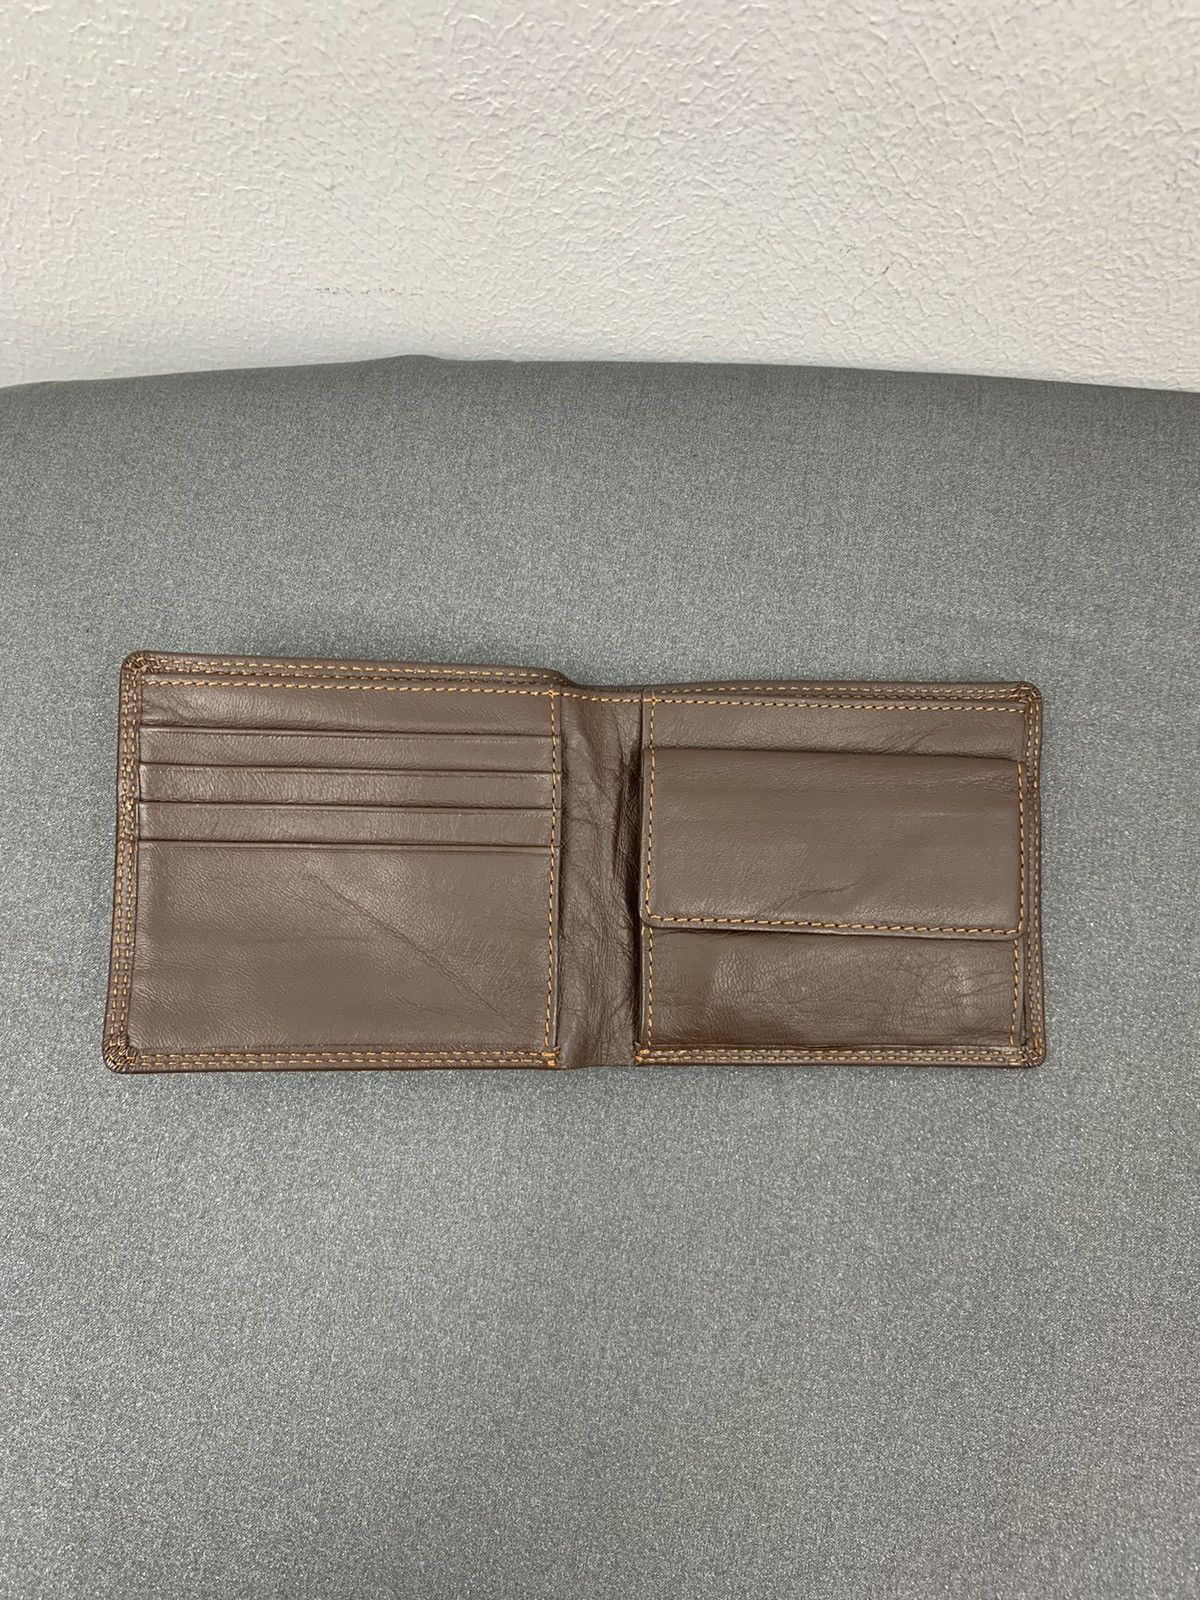 JapaneseBrand Kansai Yamamoto Leather Wallet - 4